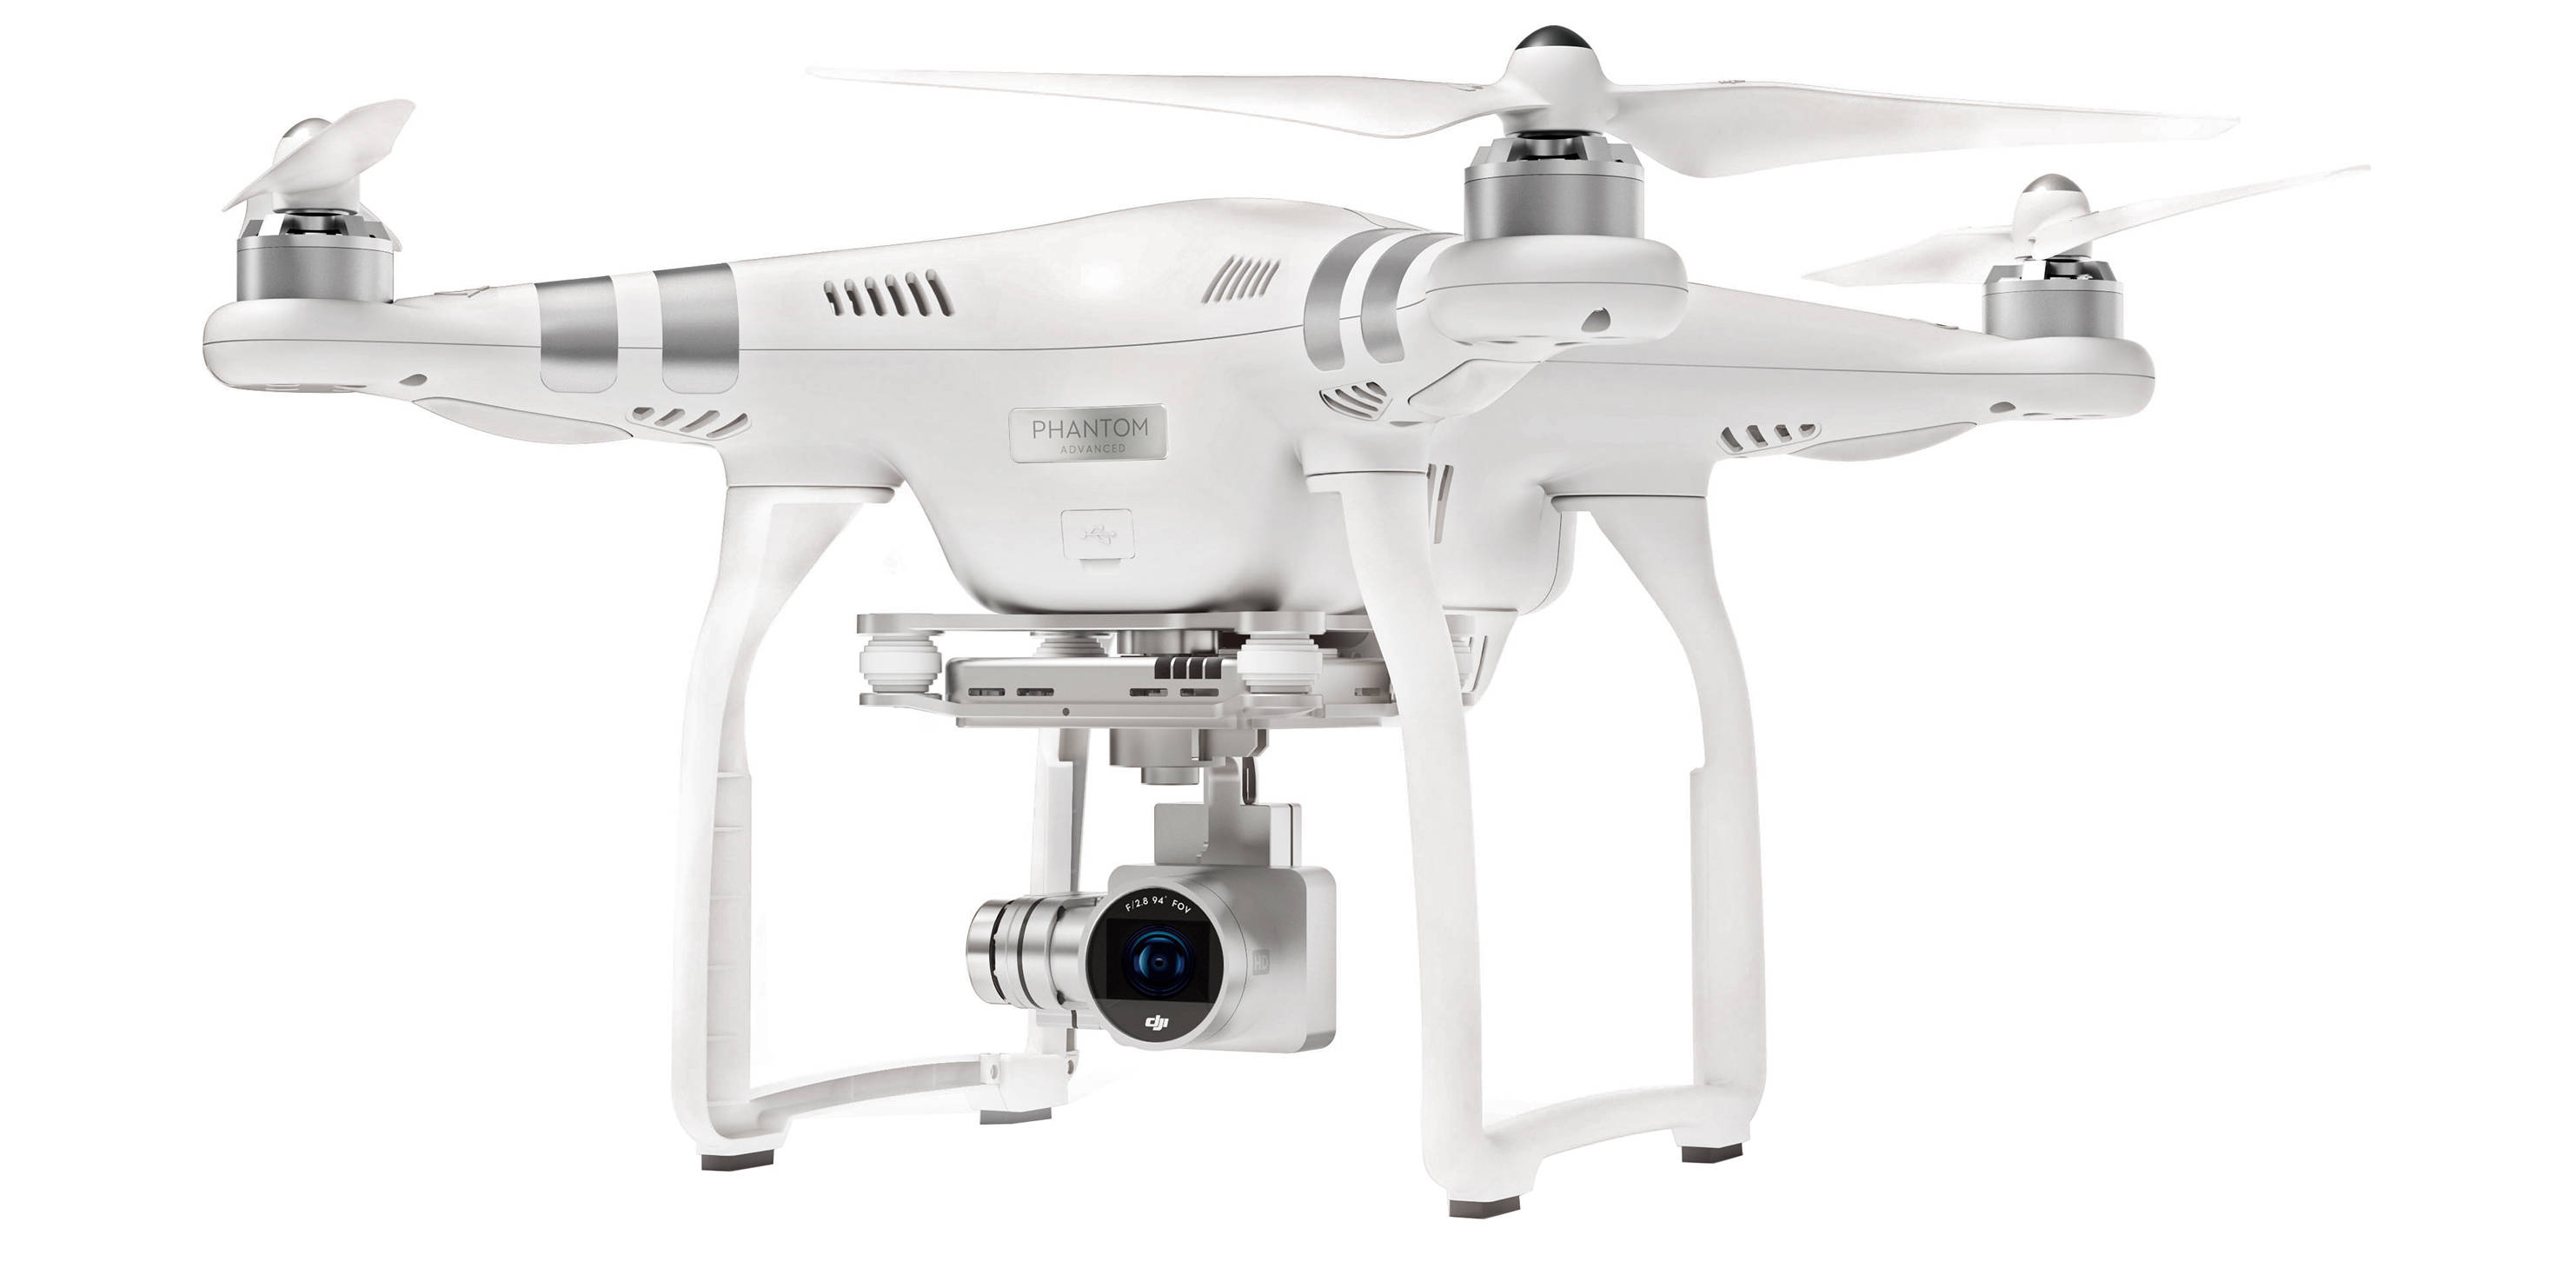 DJI Phantom 3 Advanced Quadcopter Drone w/ 2.7K HD Camera: $599